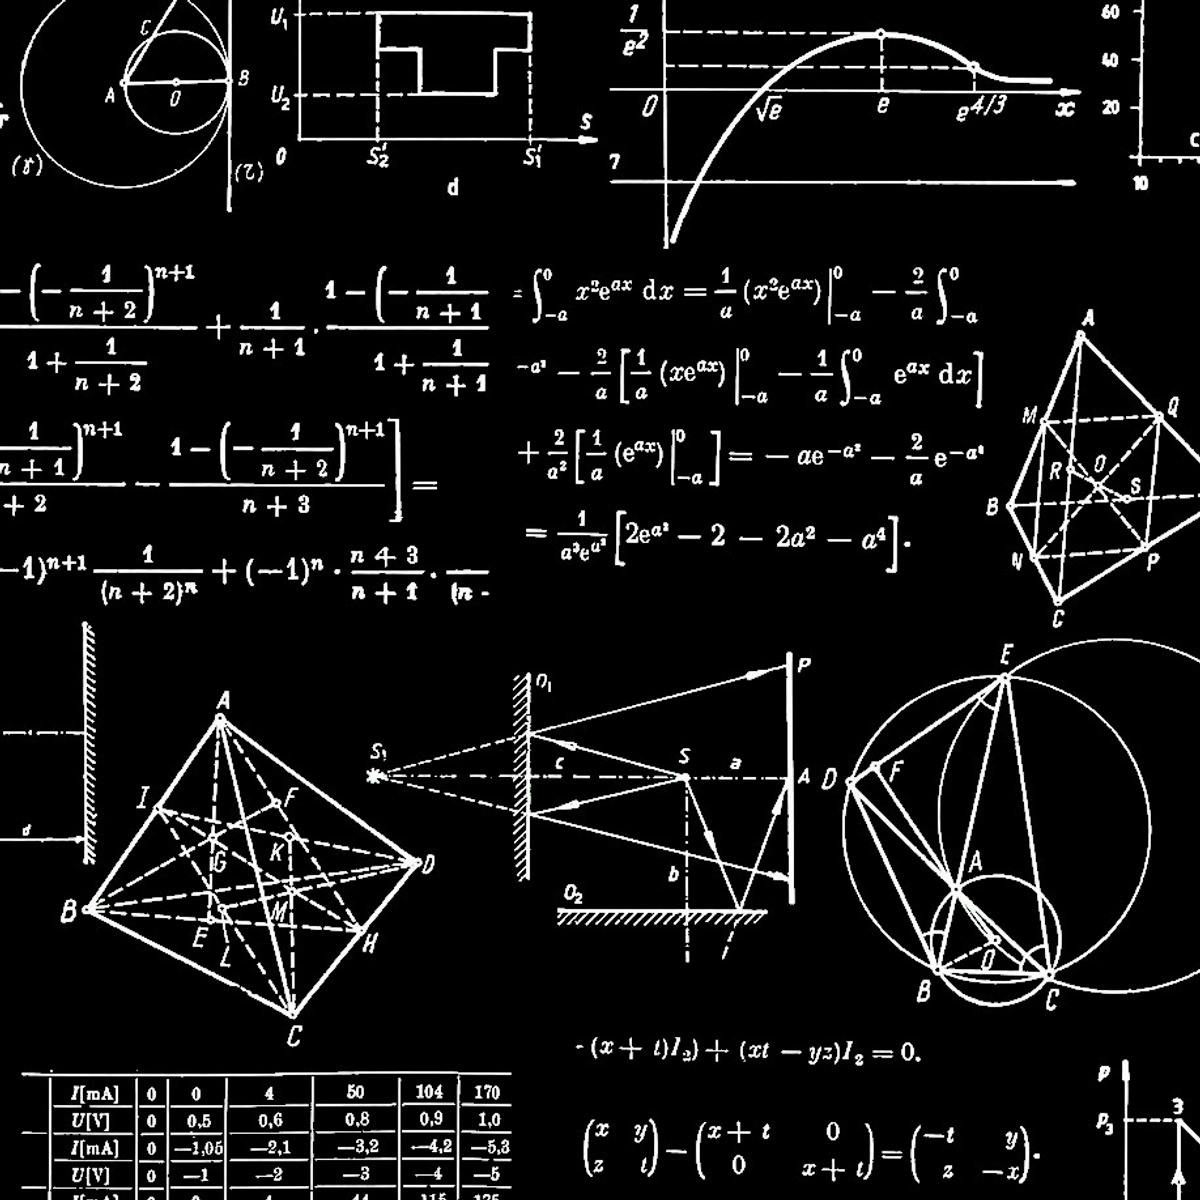 Essential Linear Algebra For Data Science Course (Cu Boulder) | Coursera